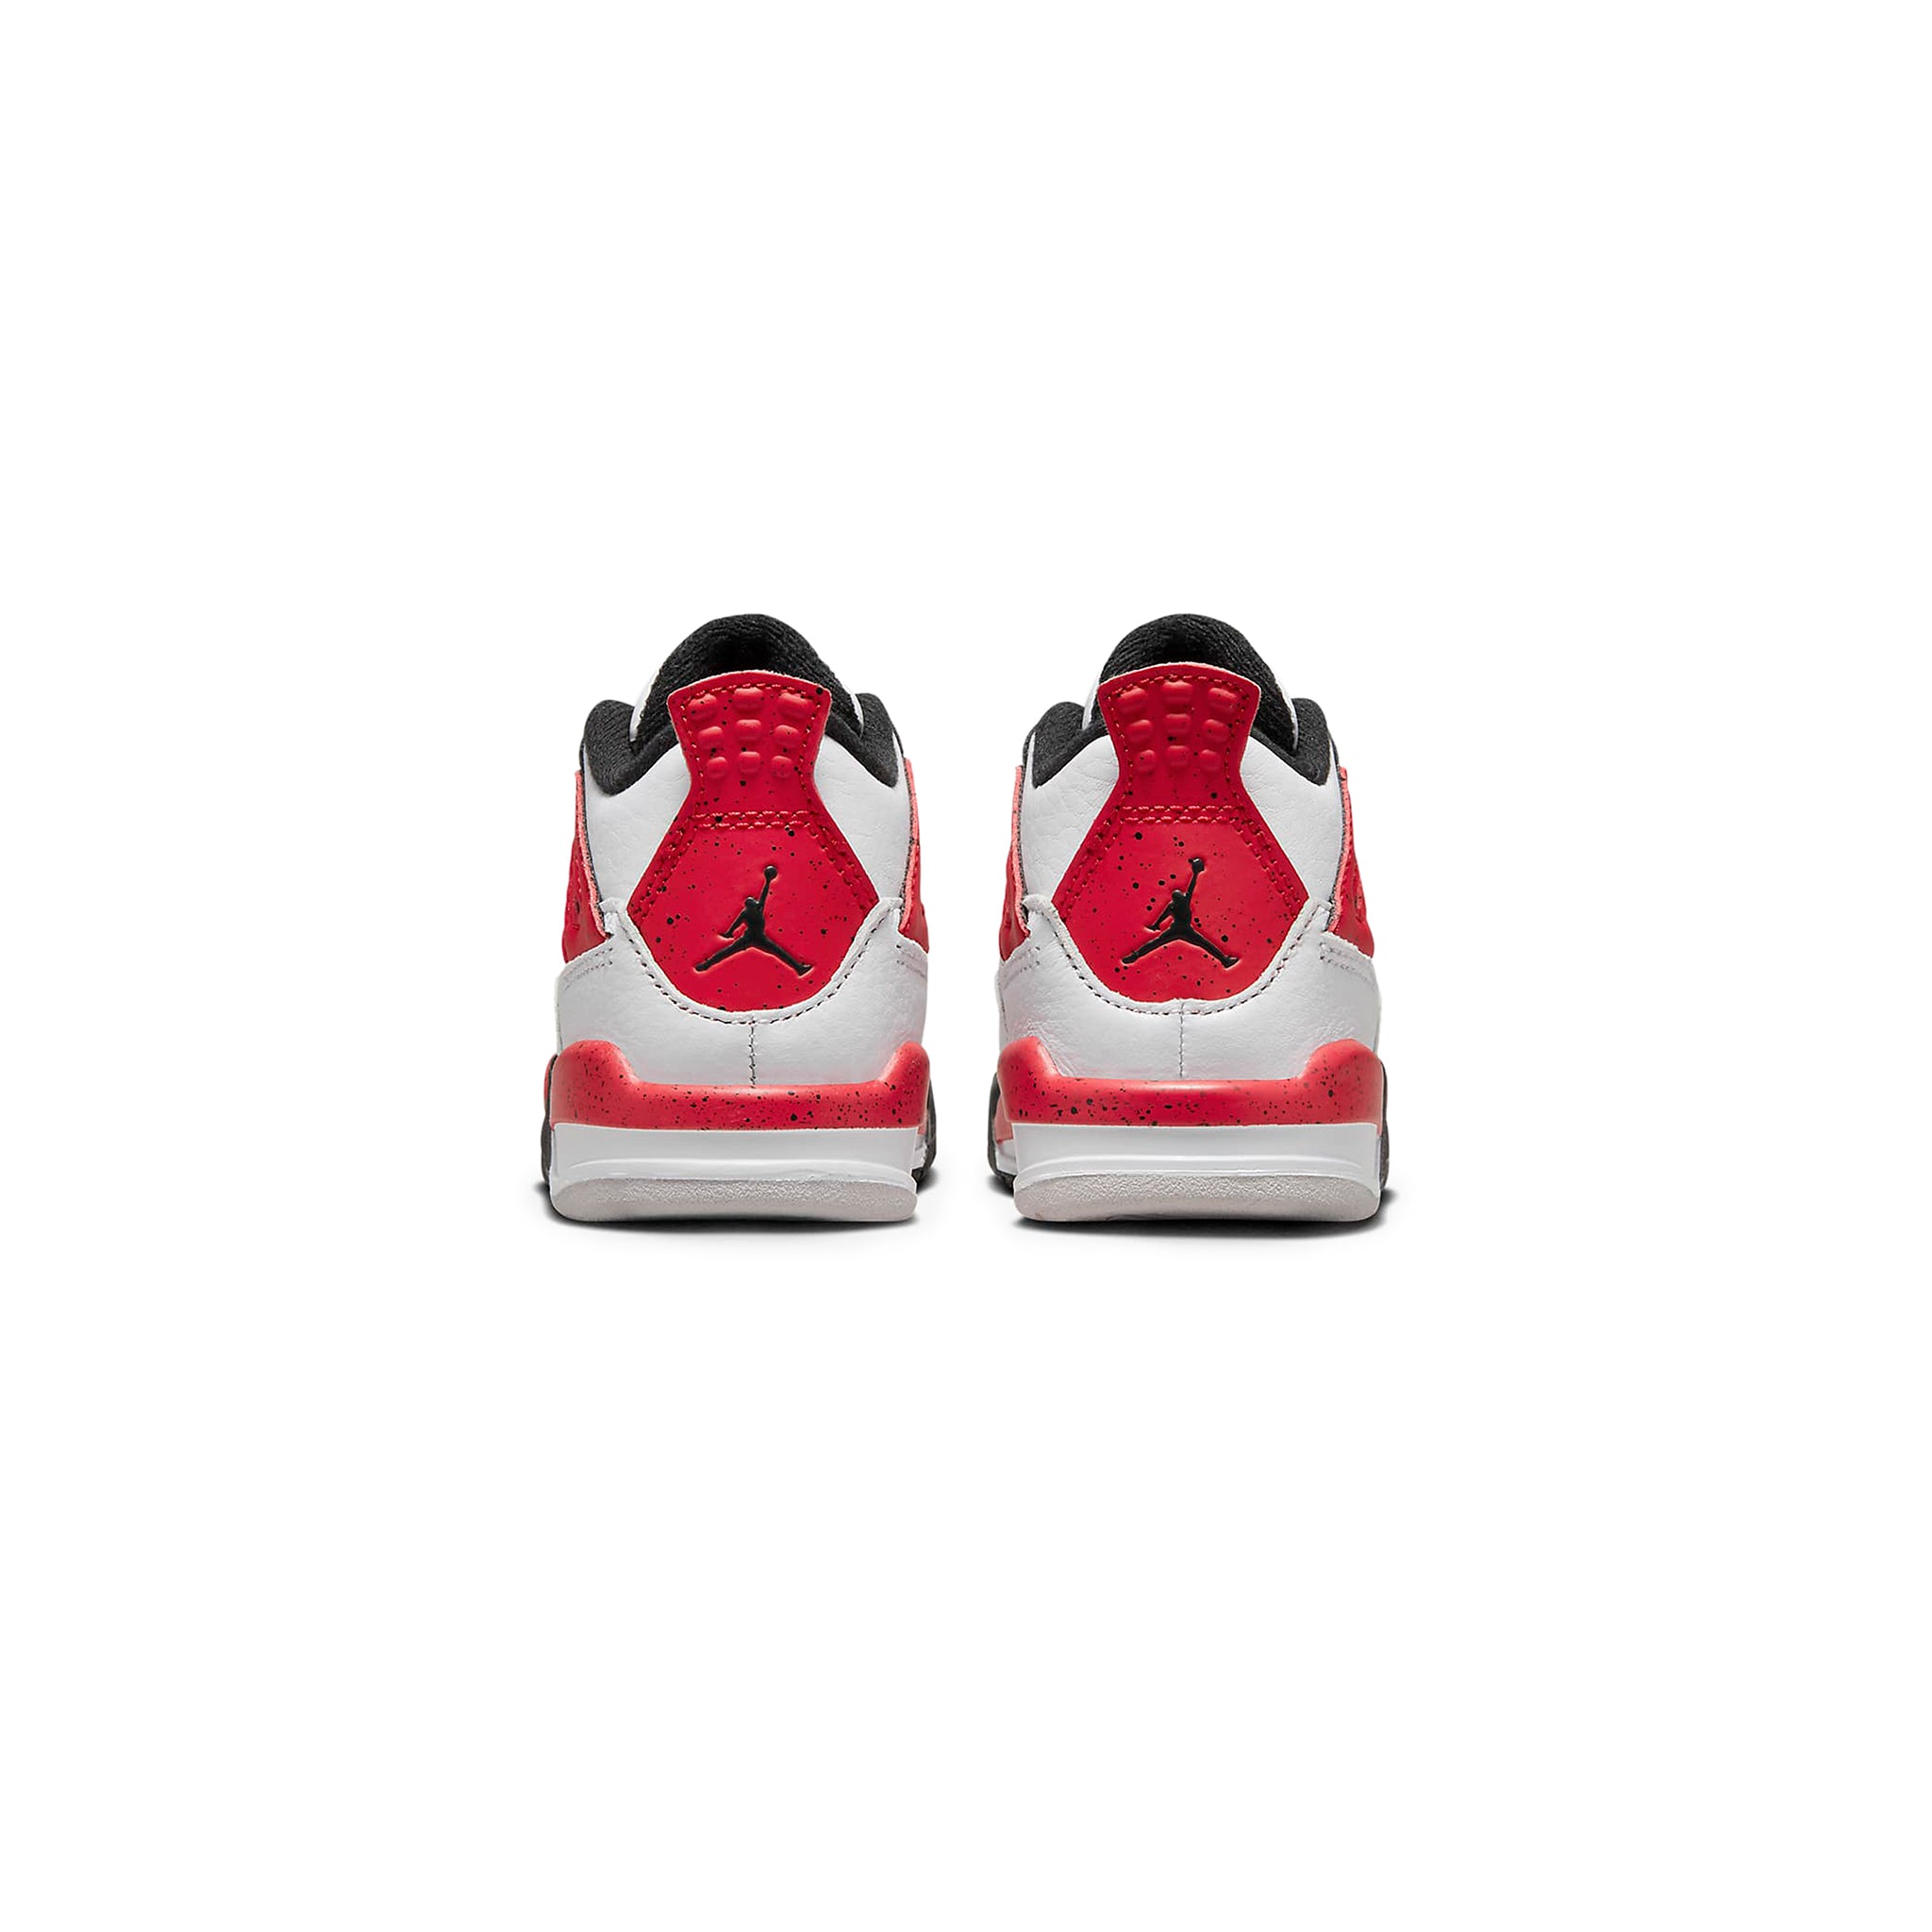 Back view of Air Jordan 4 Retro Red Cement (2023) (TD) BQ7670-161